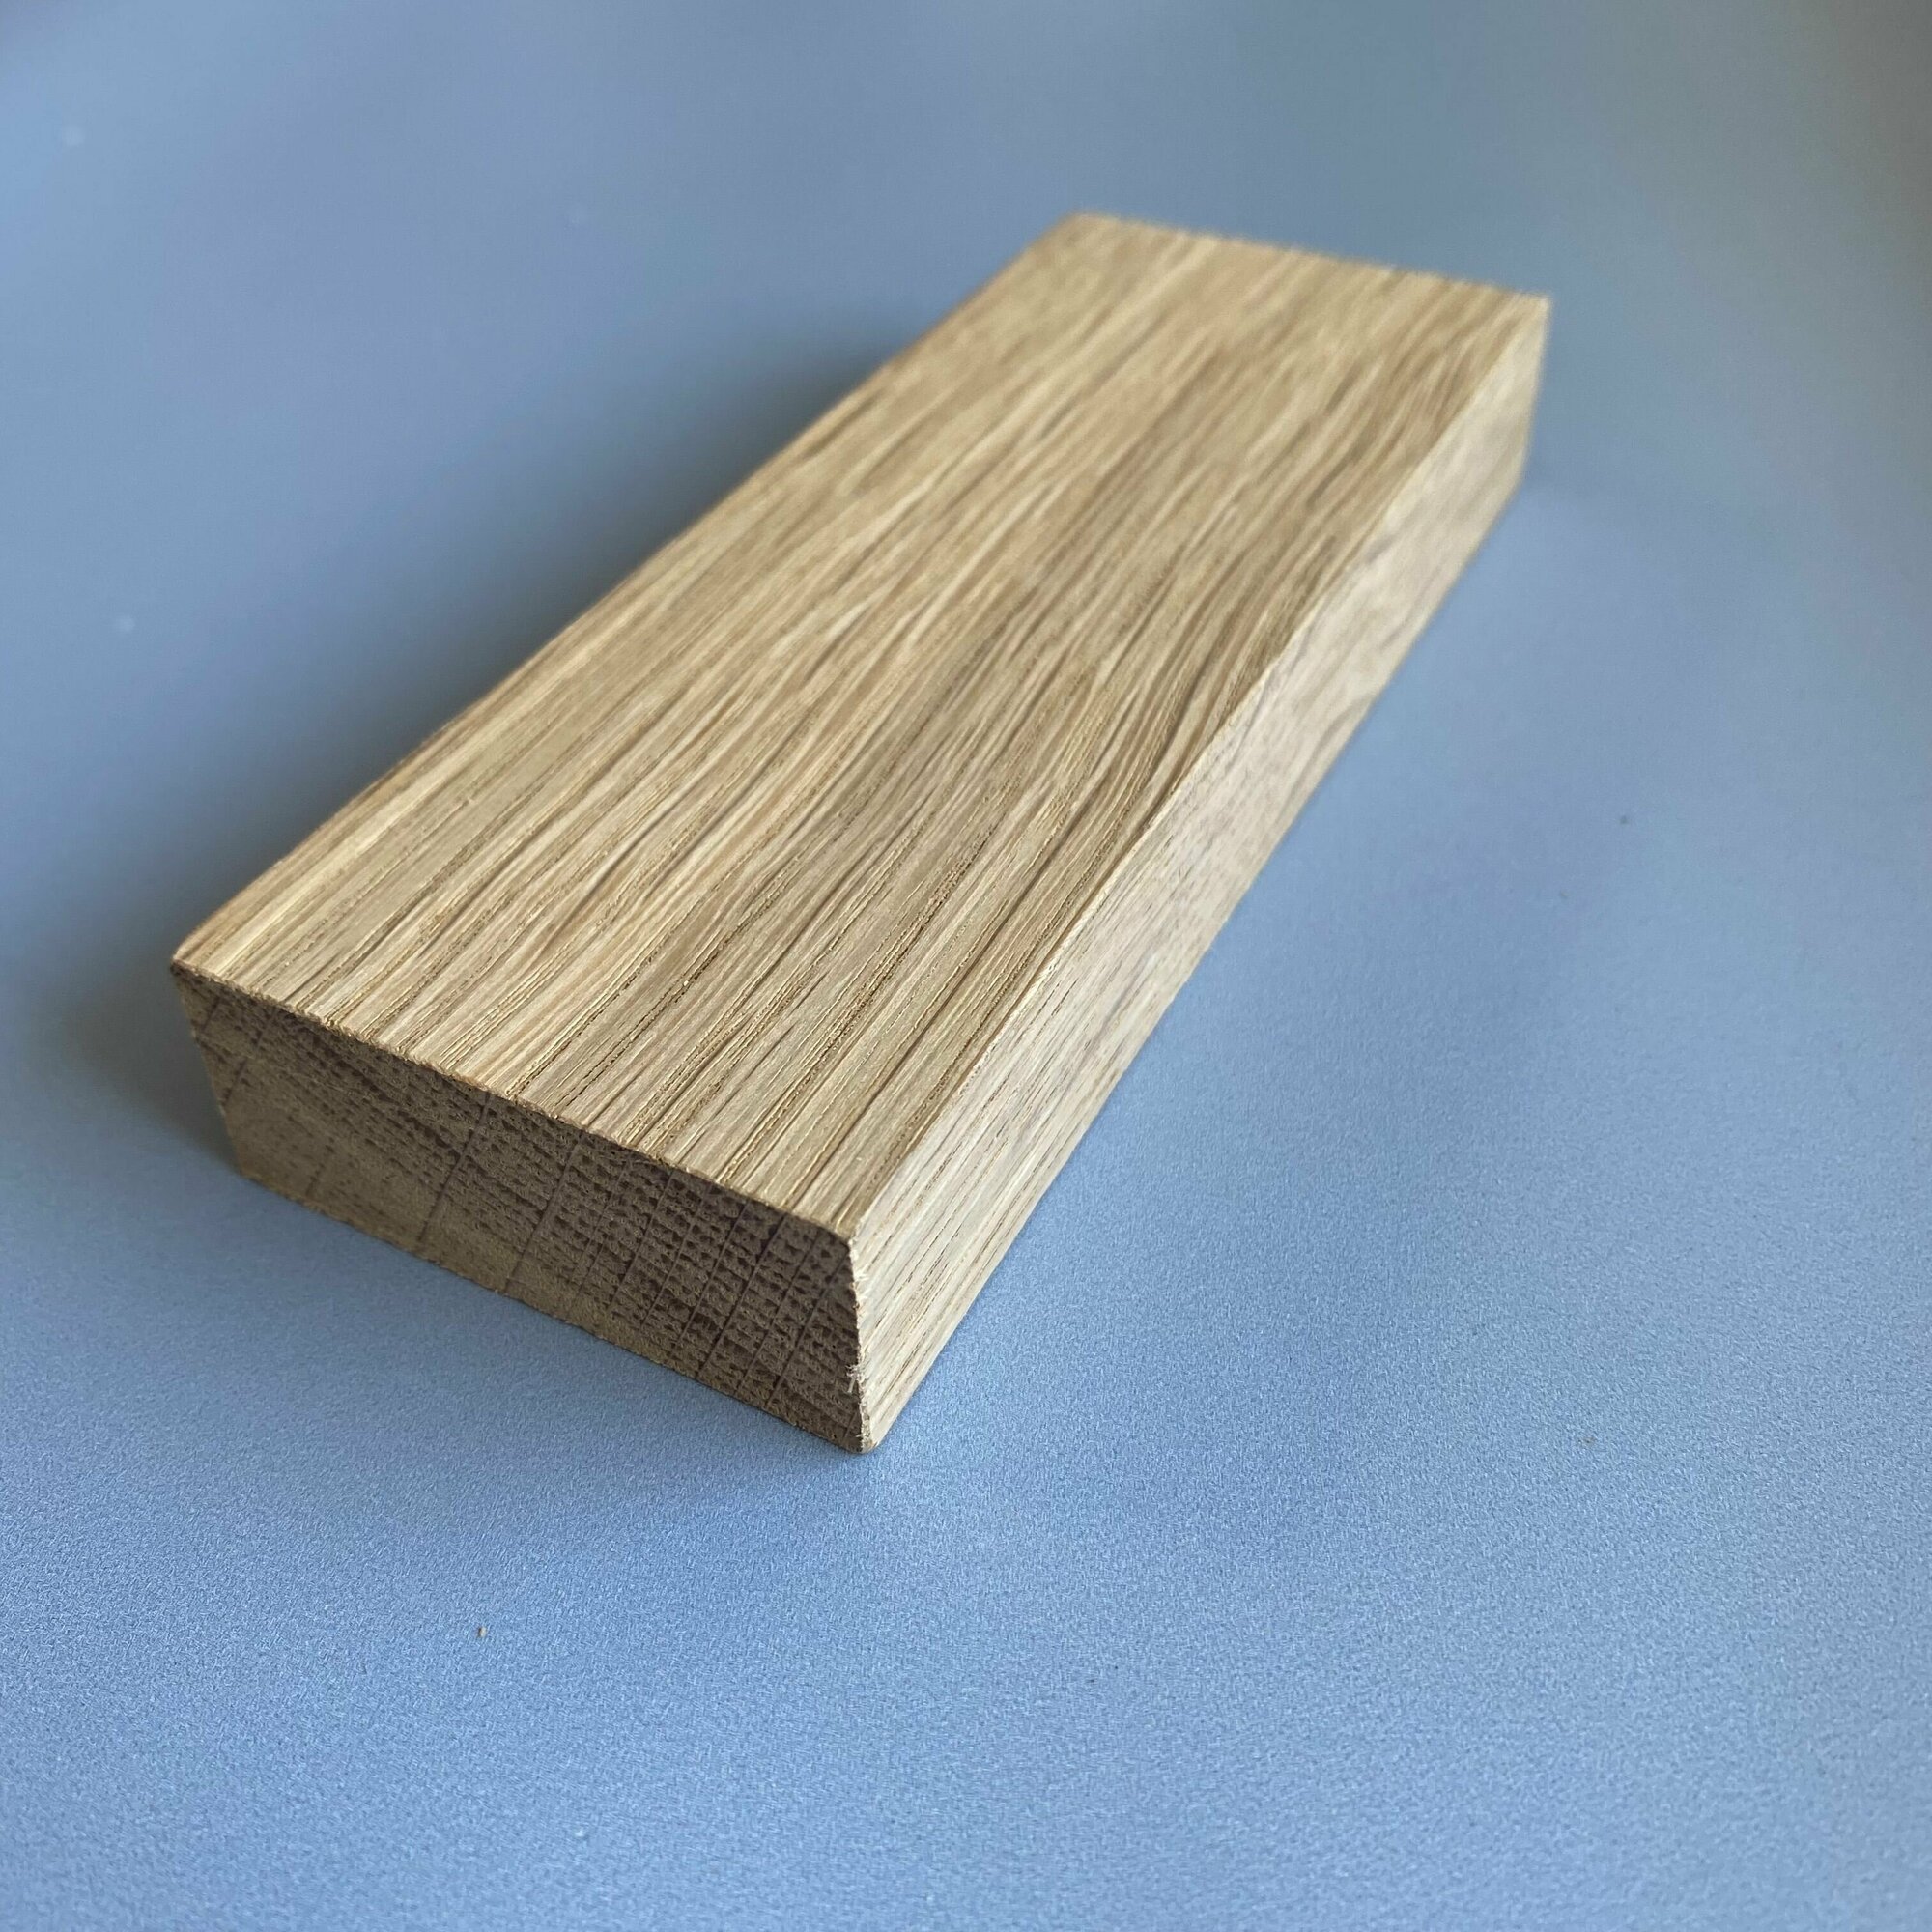 Дуб брусок деревянный для рукоделия хобби поделок. Брусок строганый 13х5х3 см для рукояти ножа.